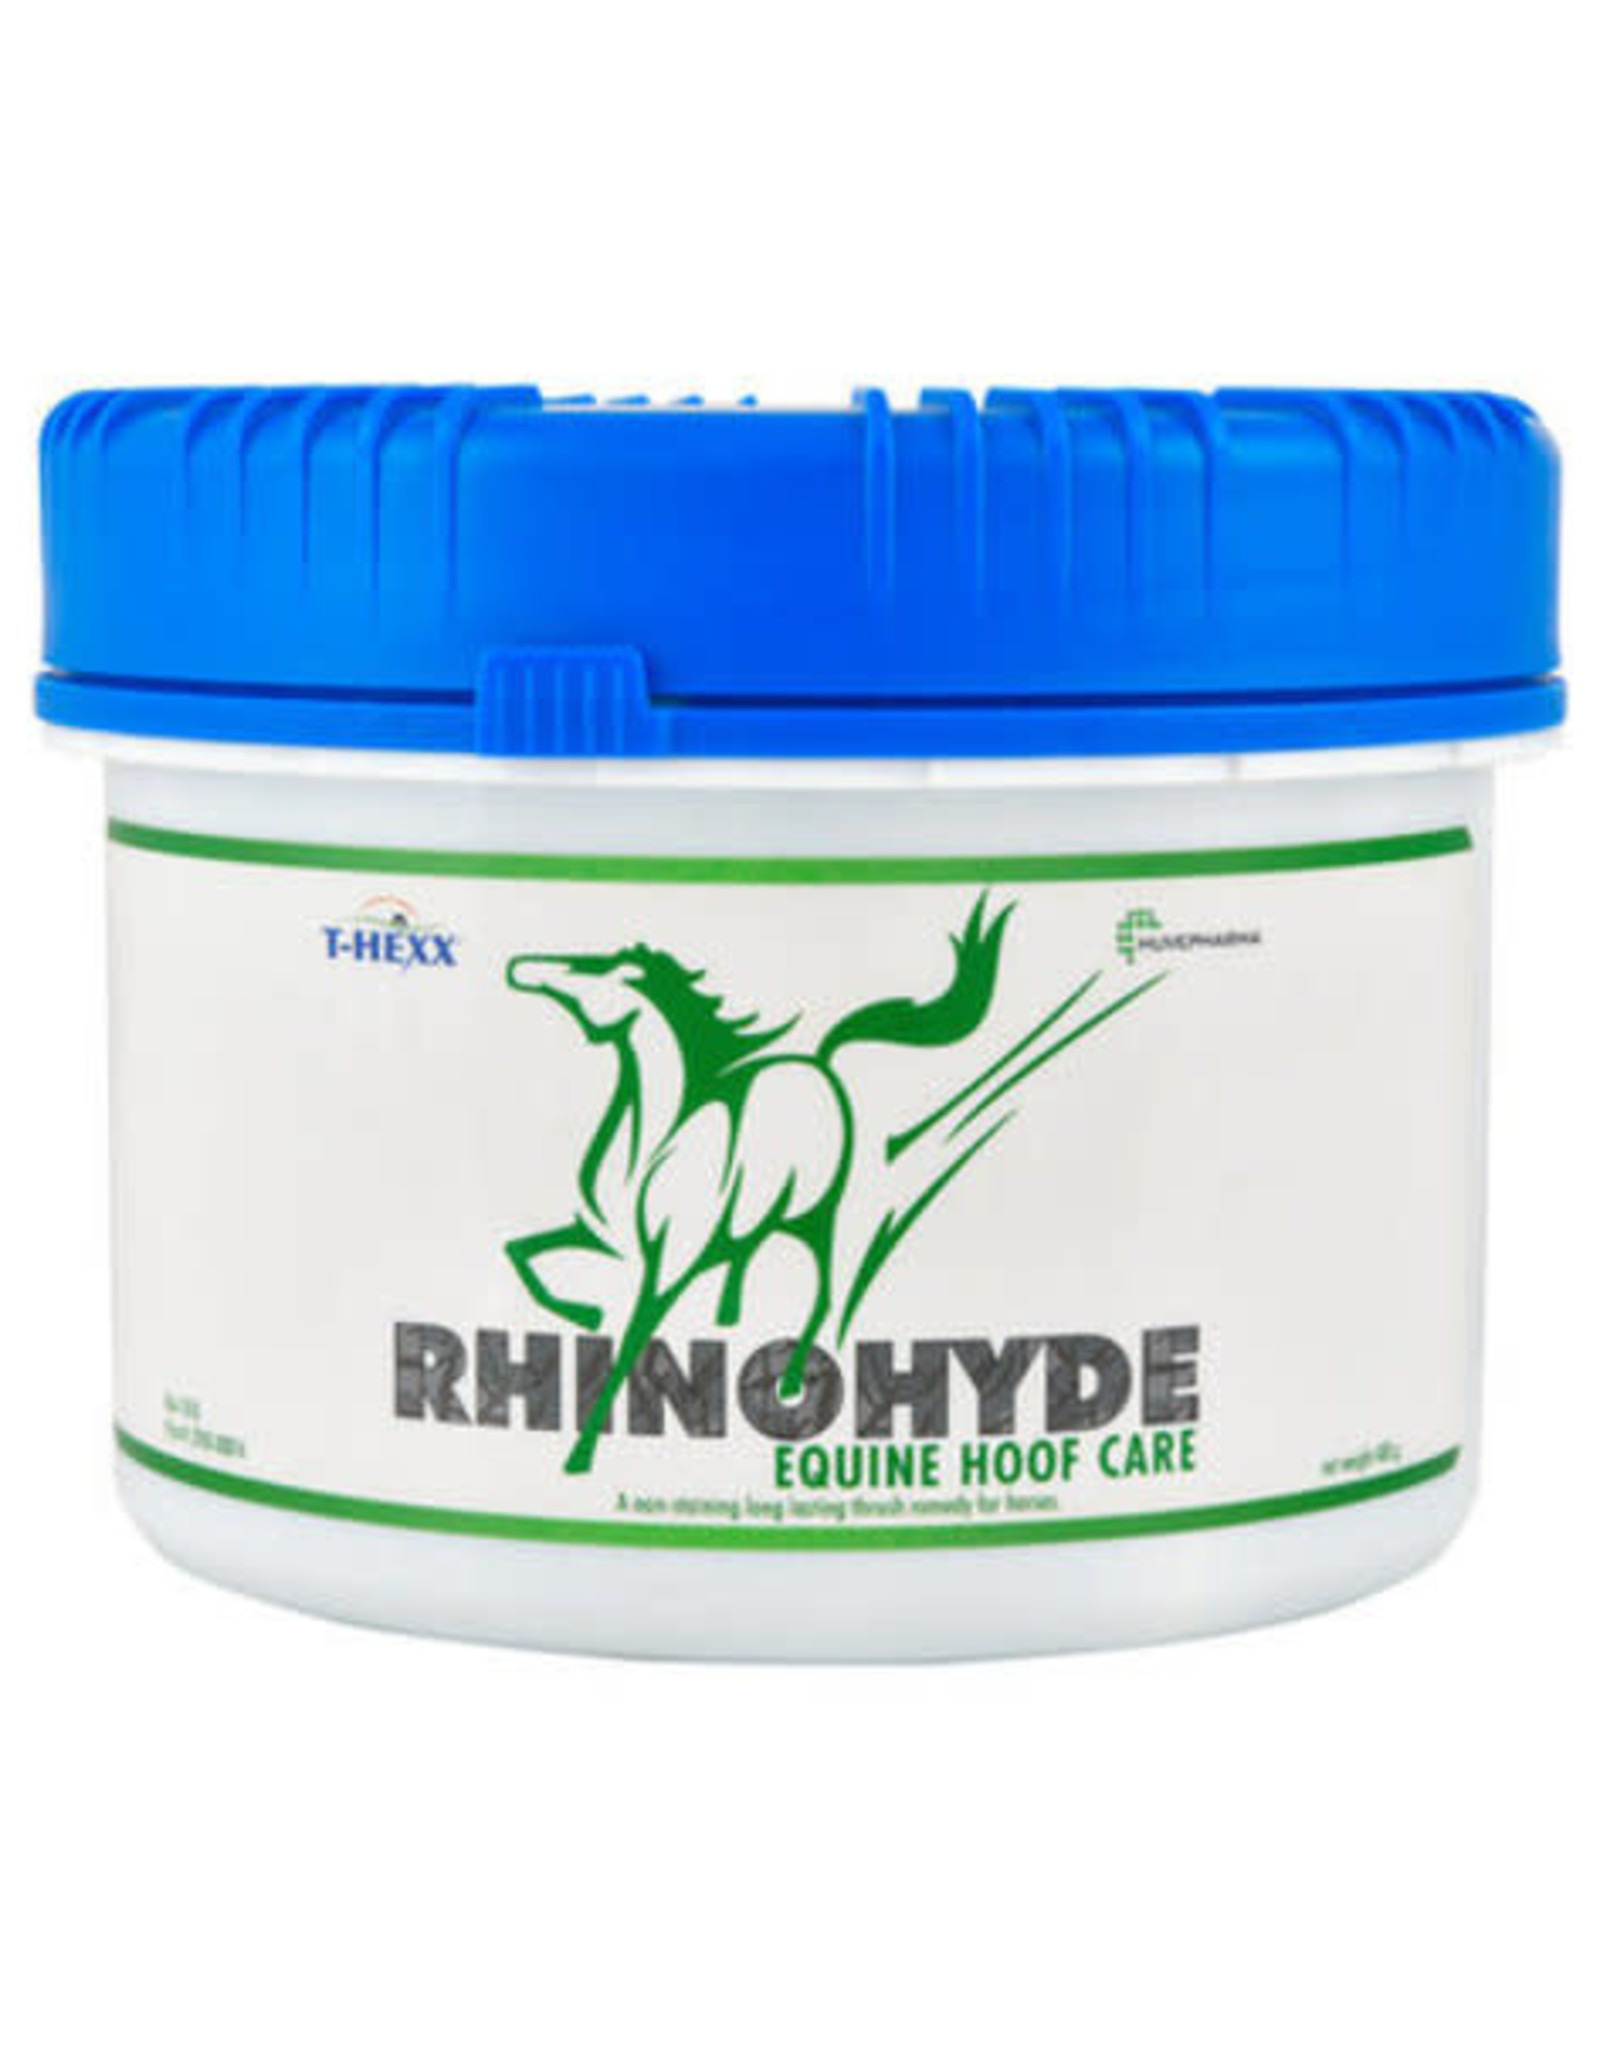 Rhinohyde Equine Hoof Care